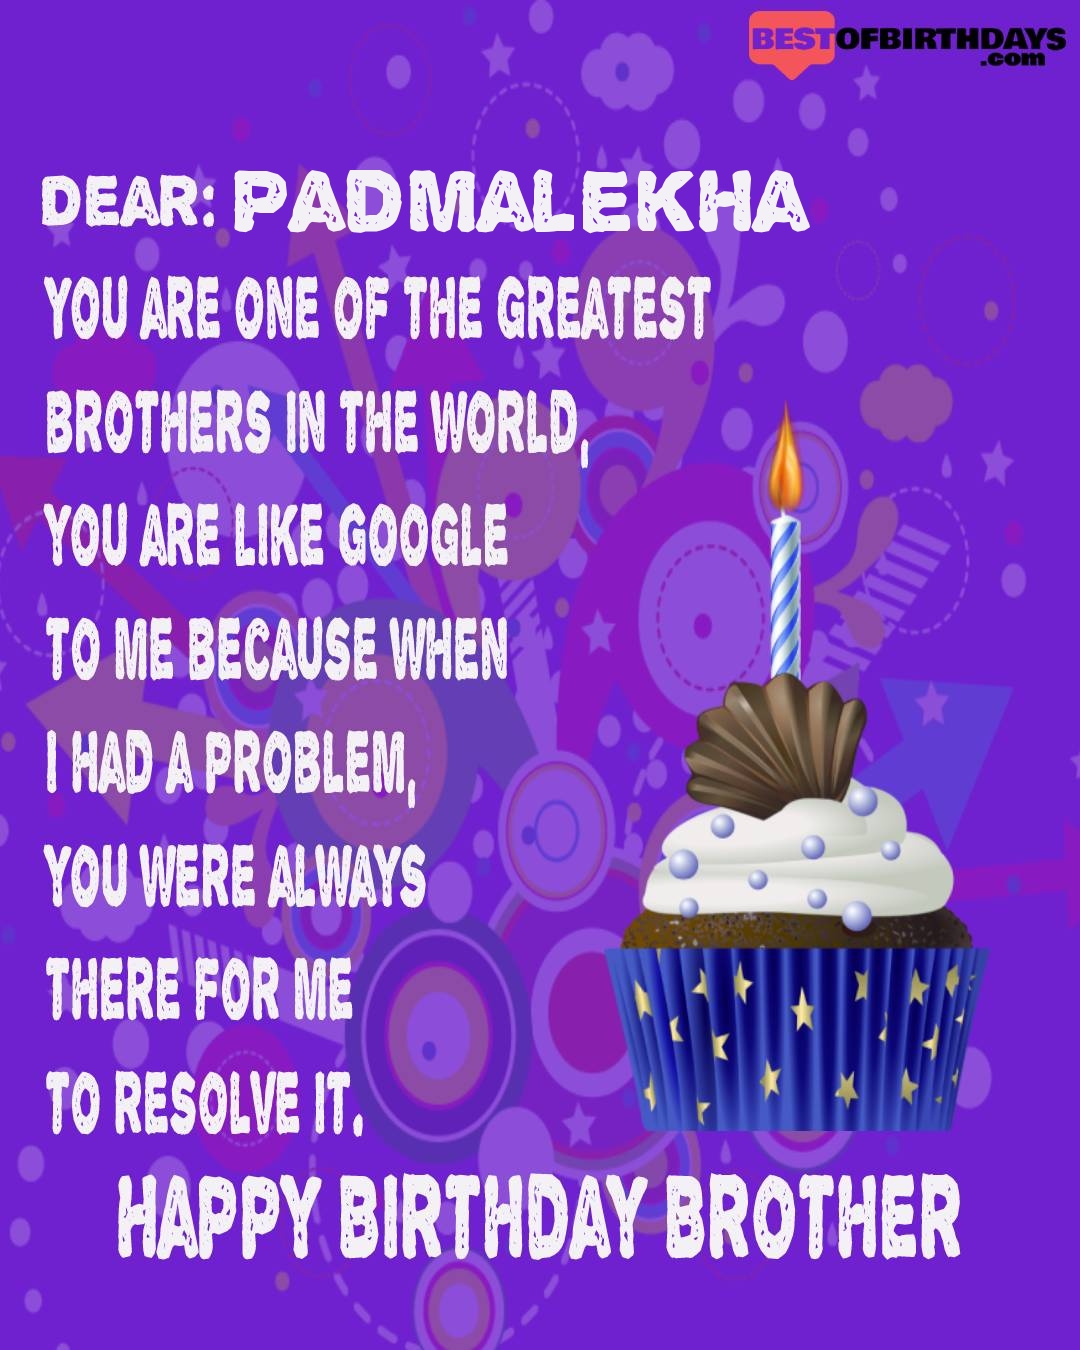 Happy birthday padmalekha bhai brother bro